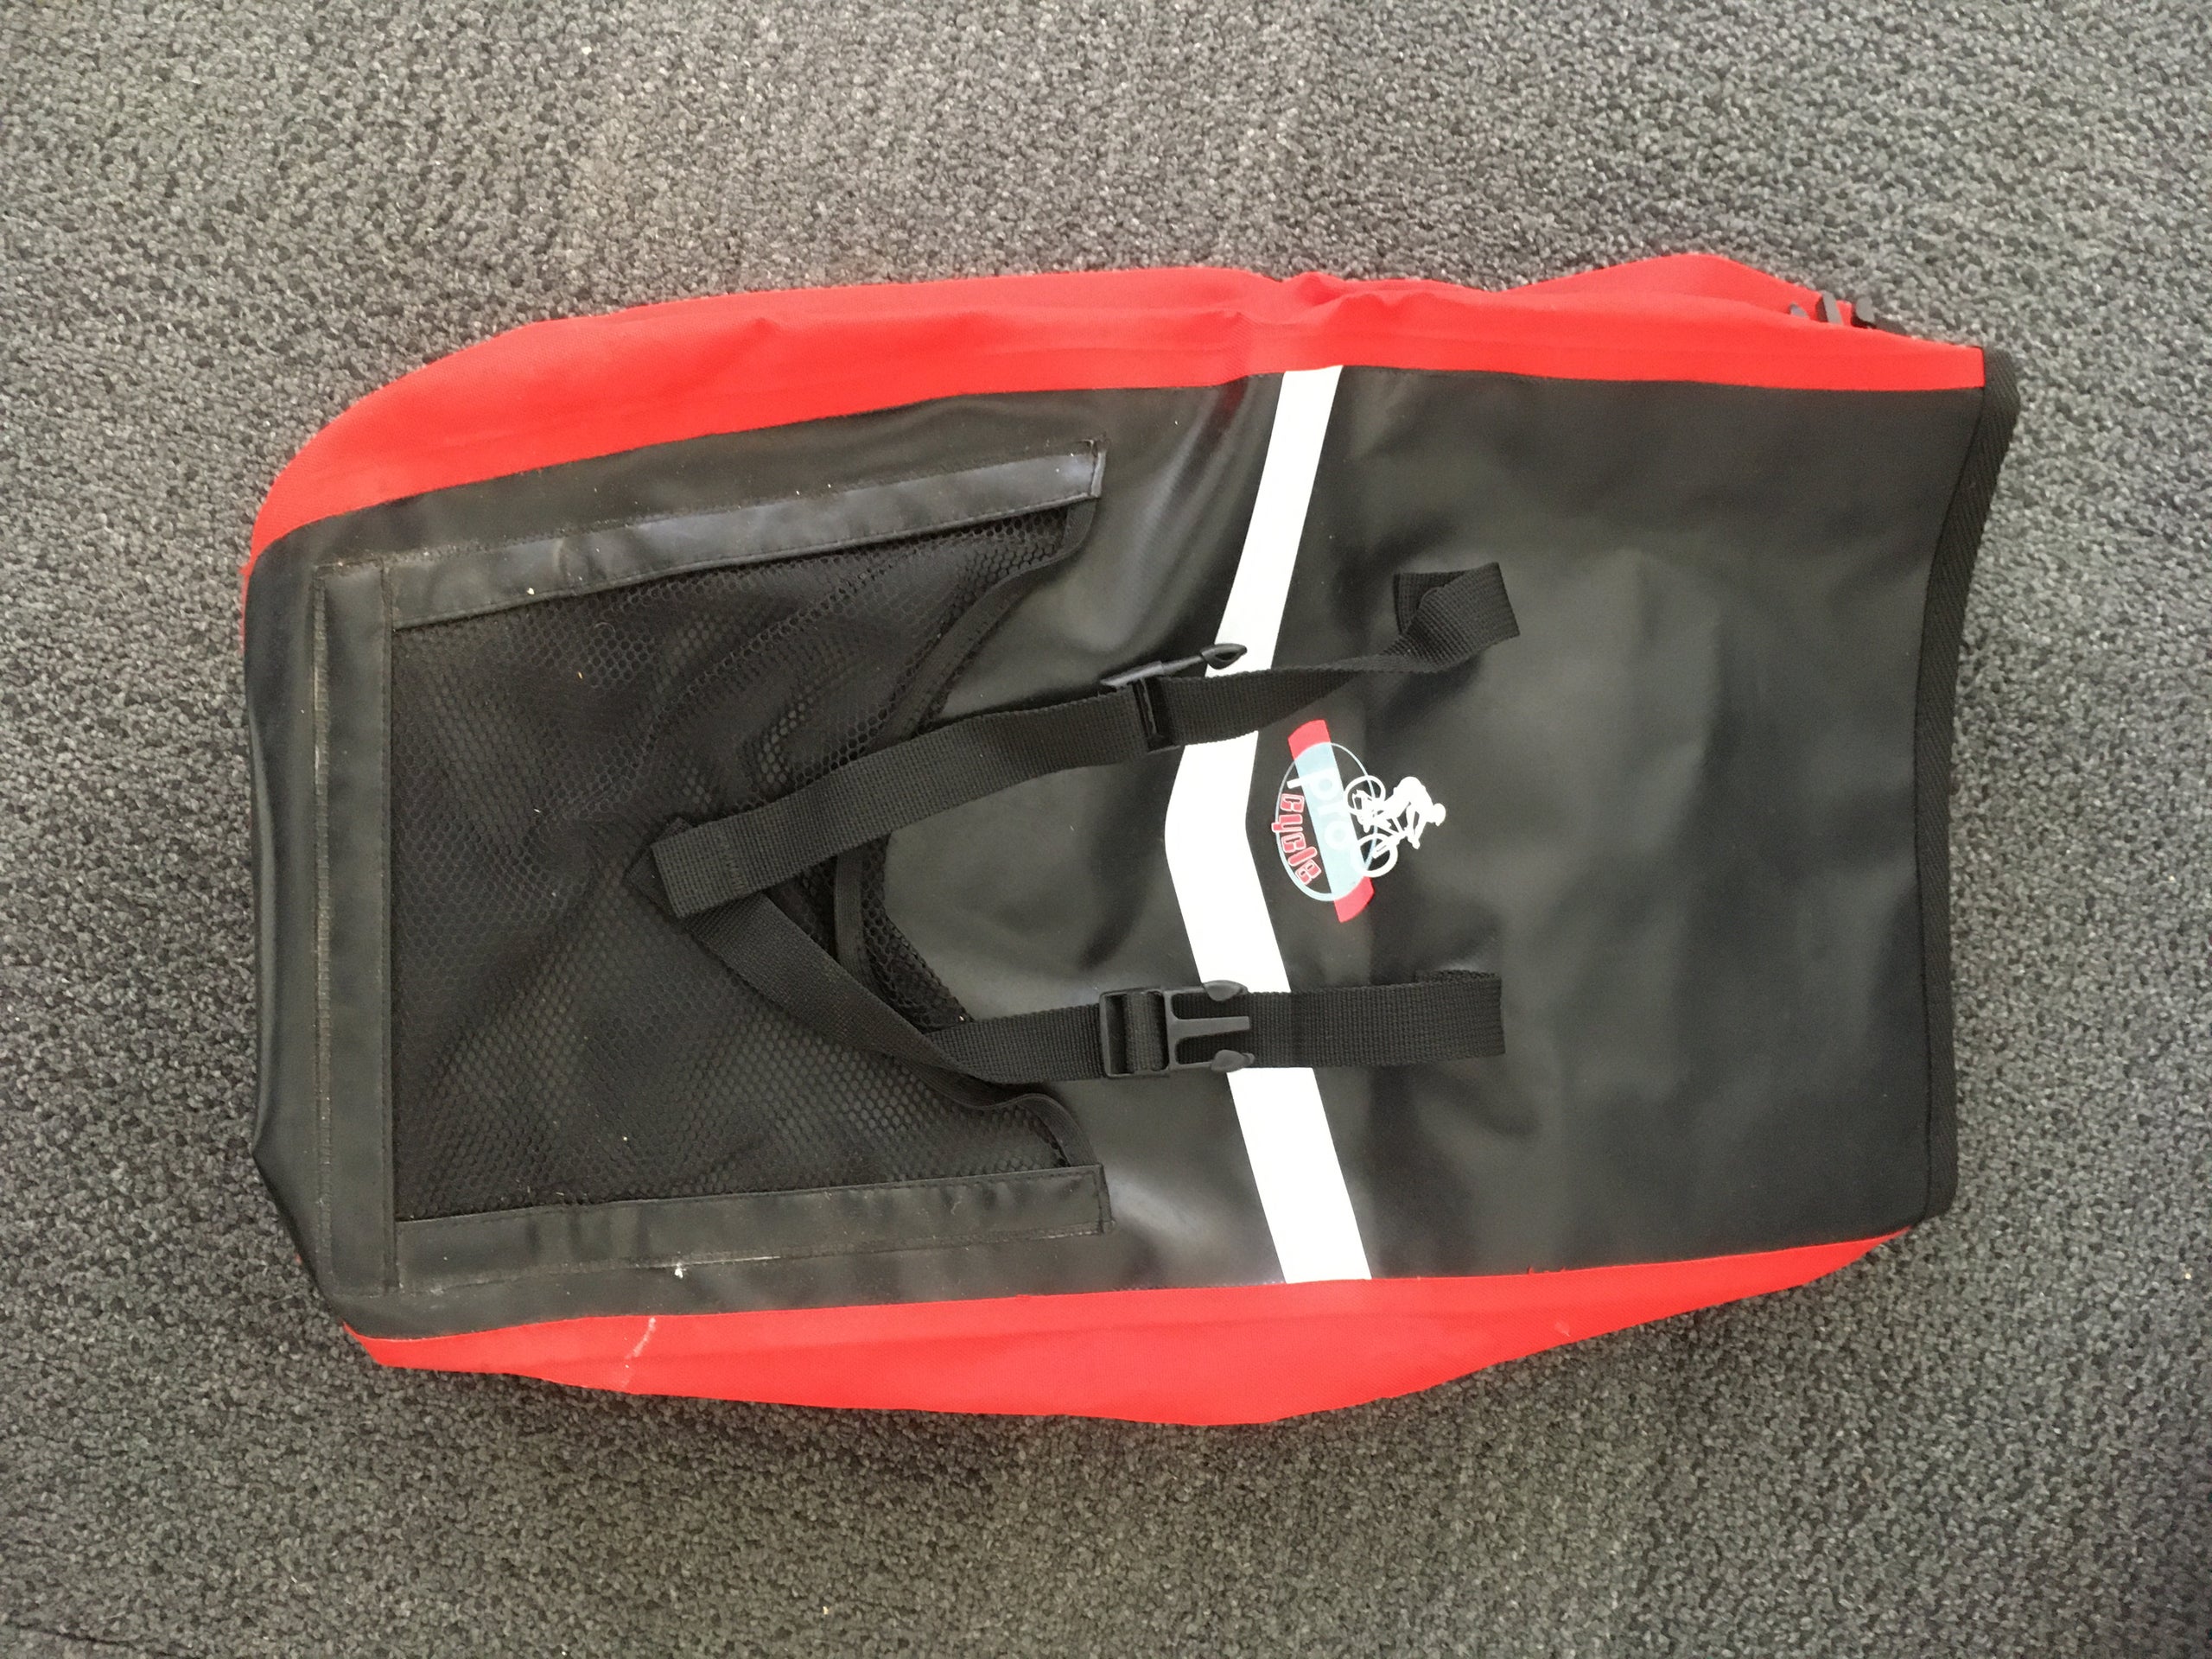 Pannier bag - large single bag - red